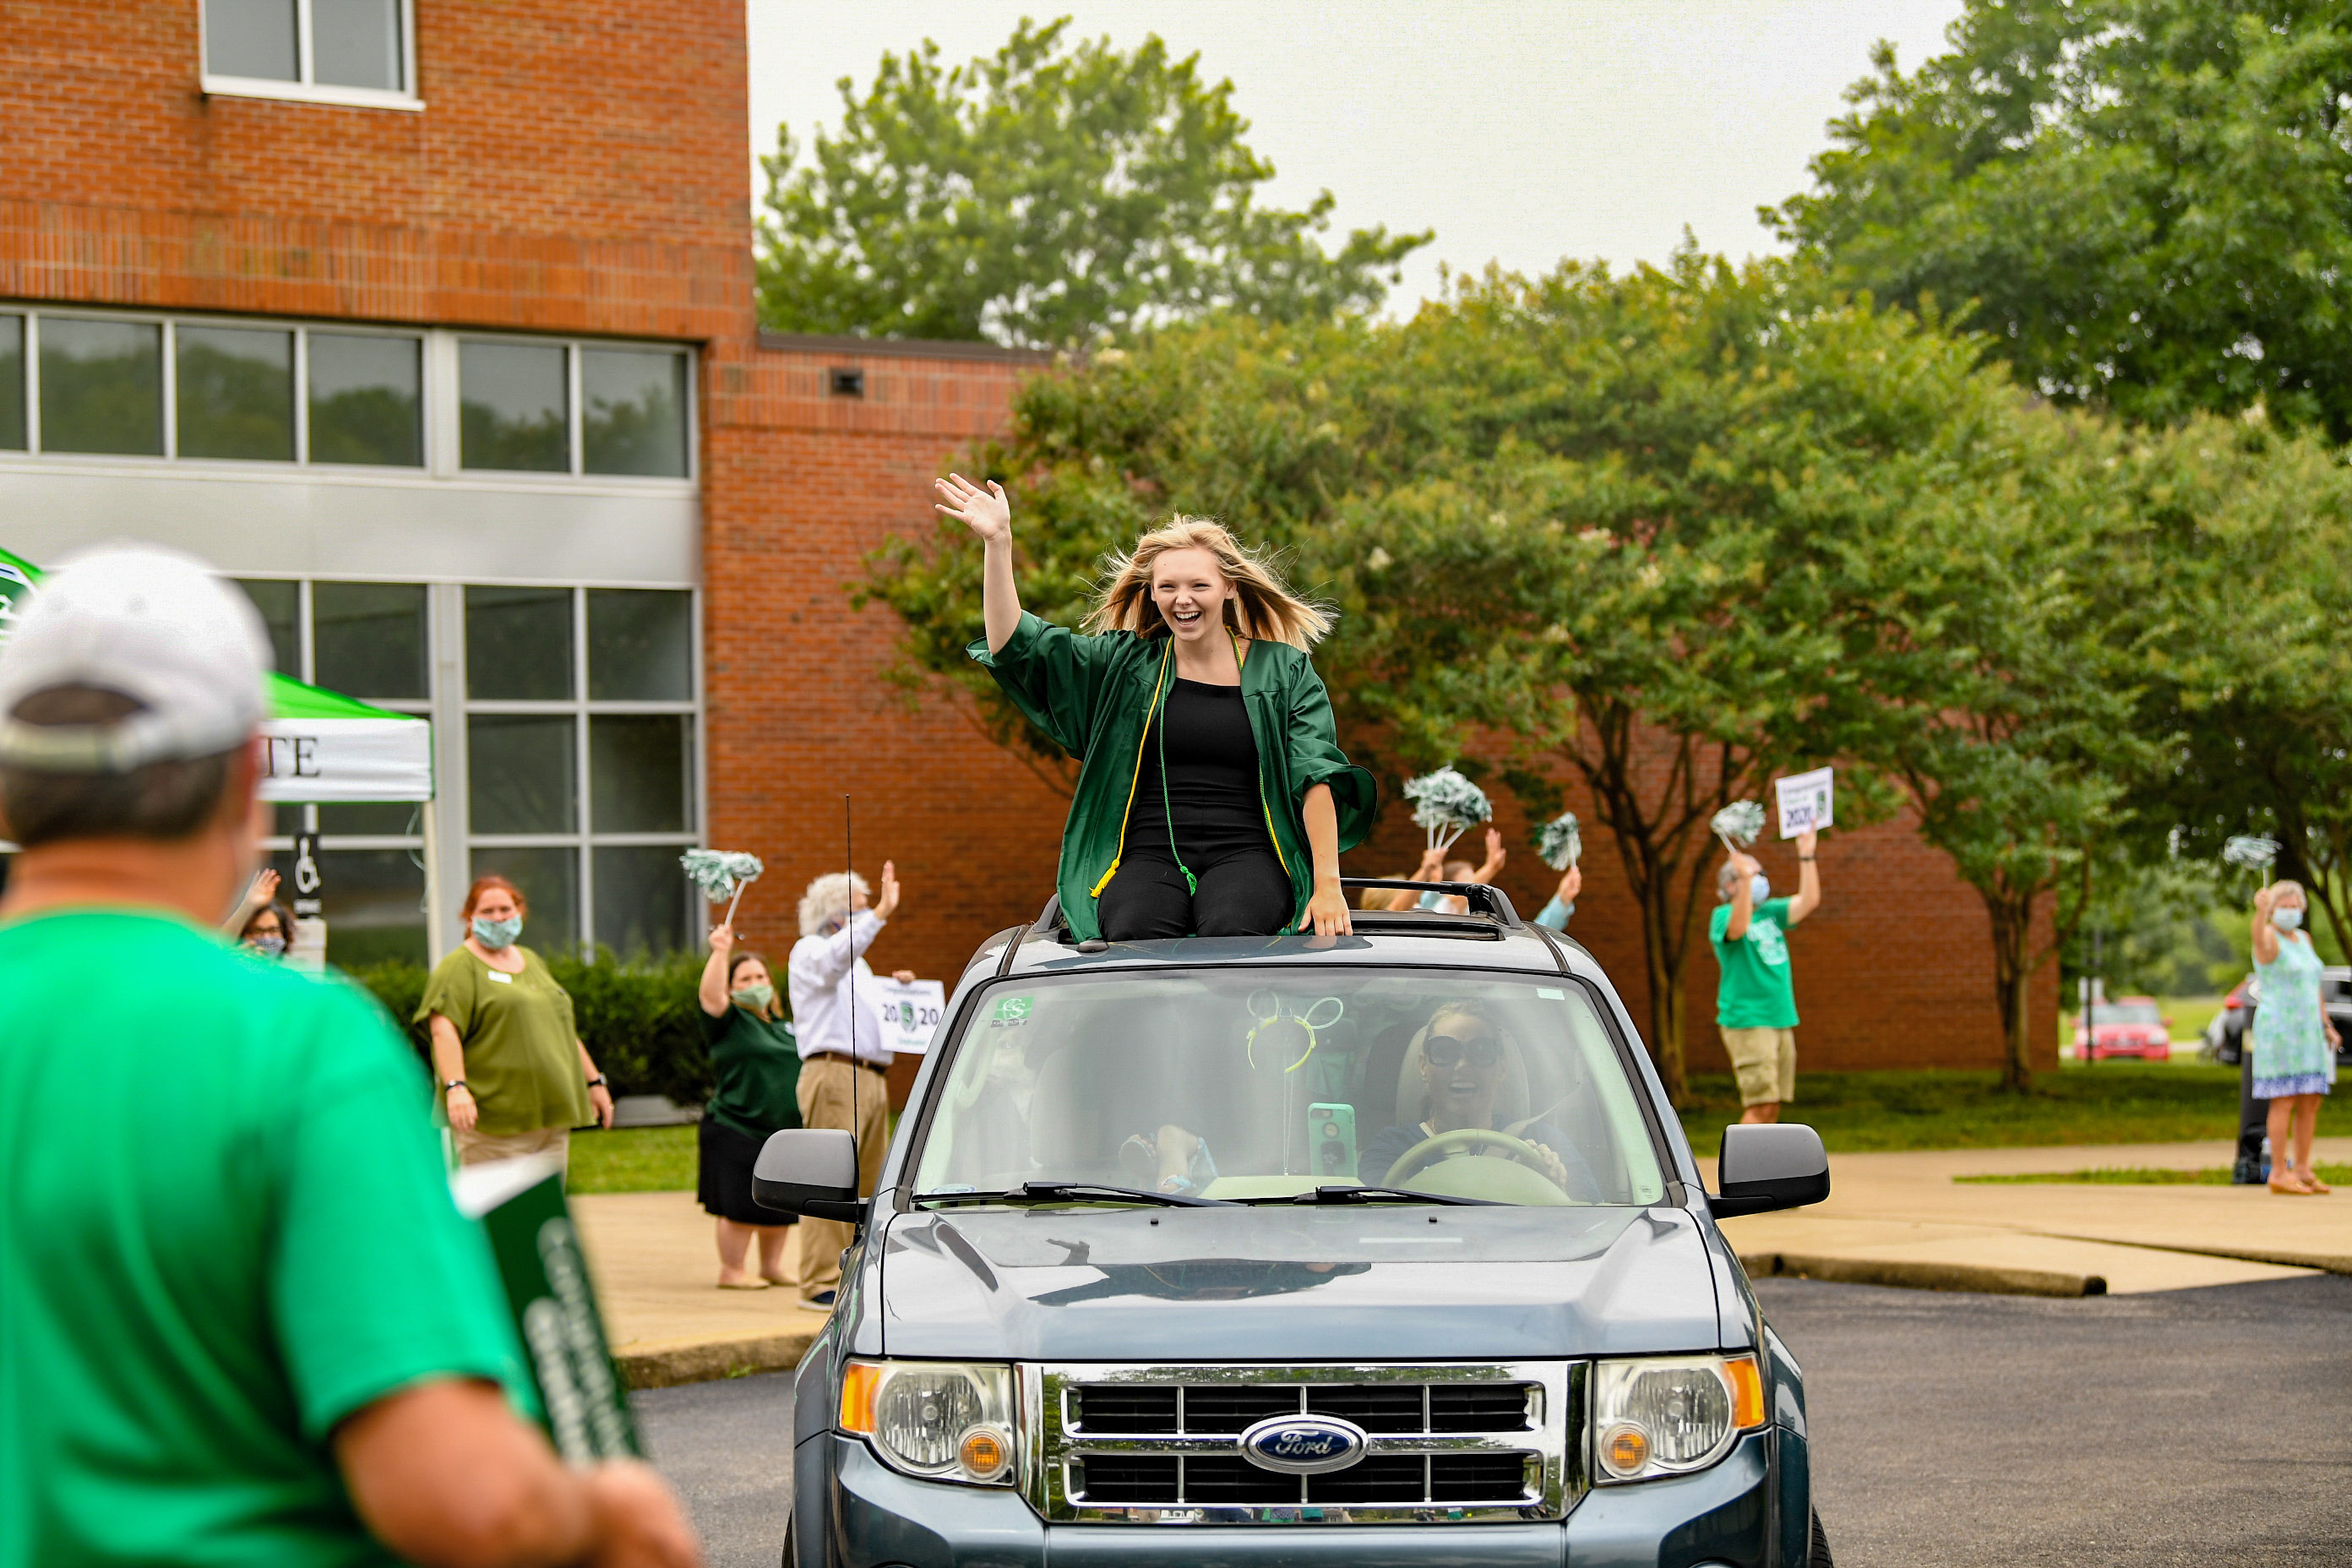 Jenna on top of a car waving